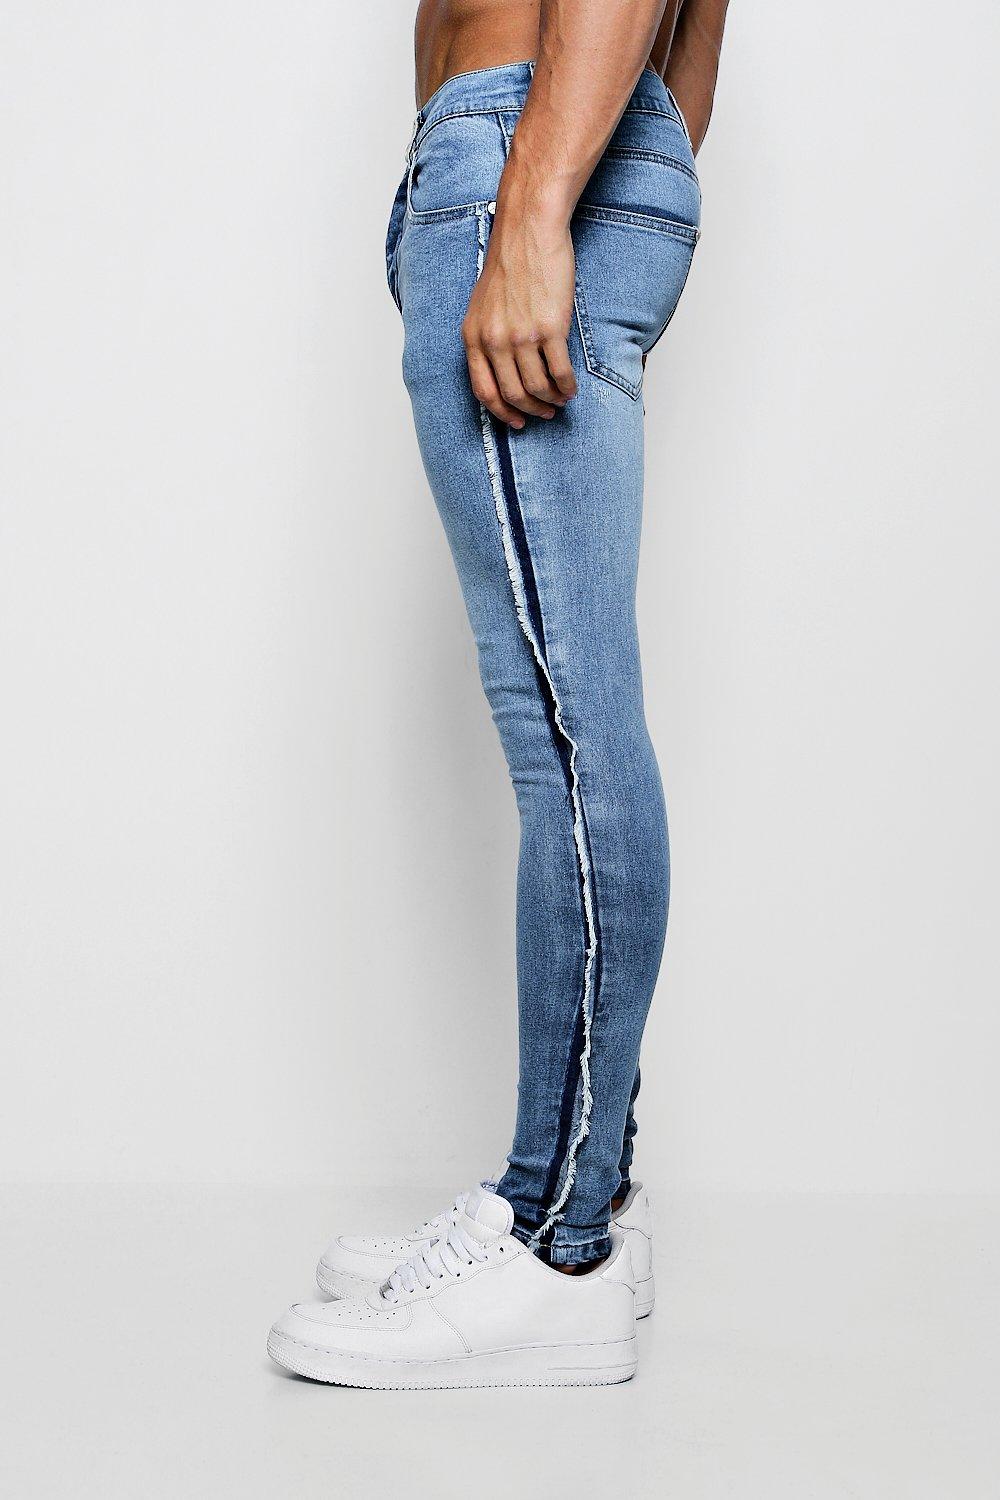 frayed side jeans